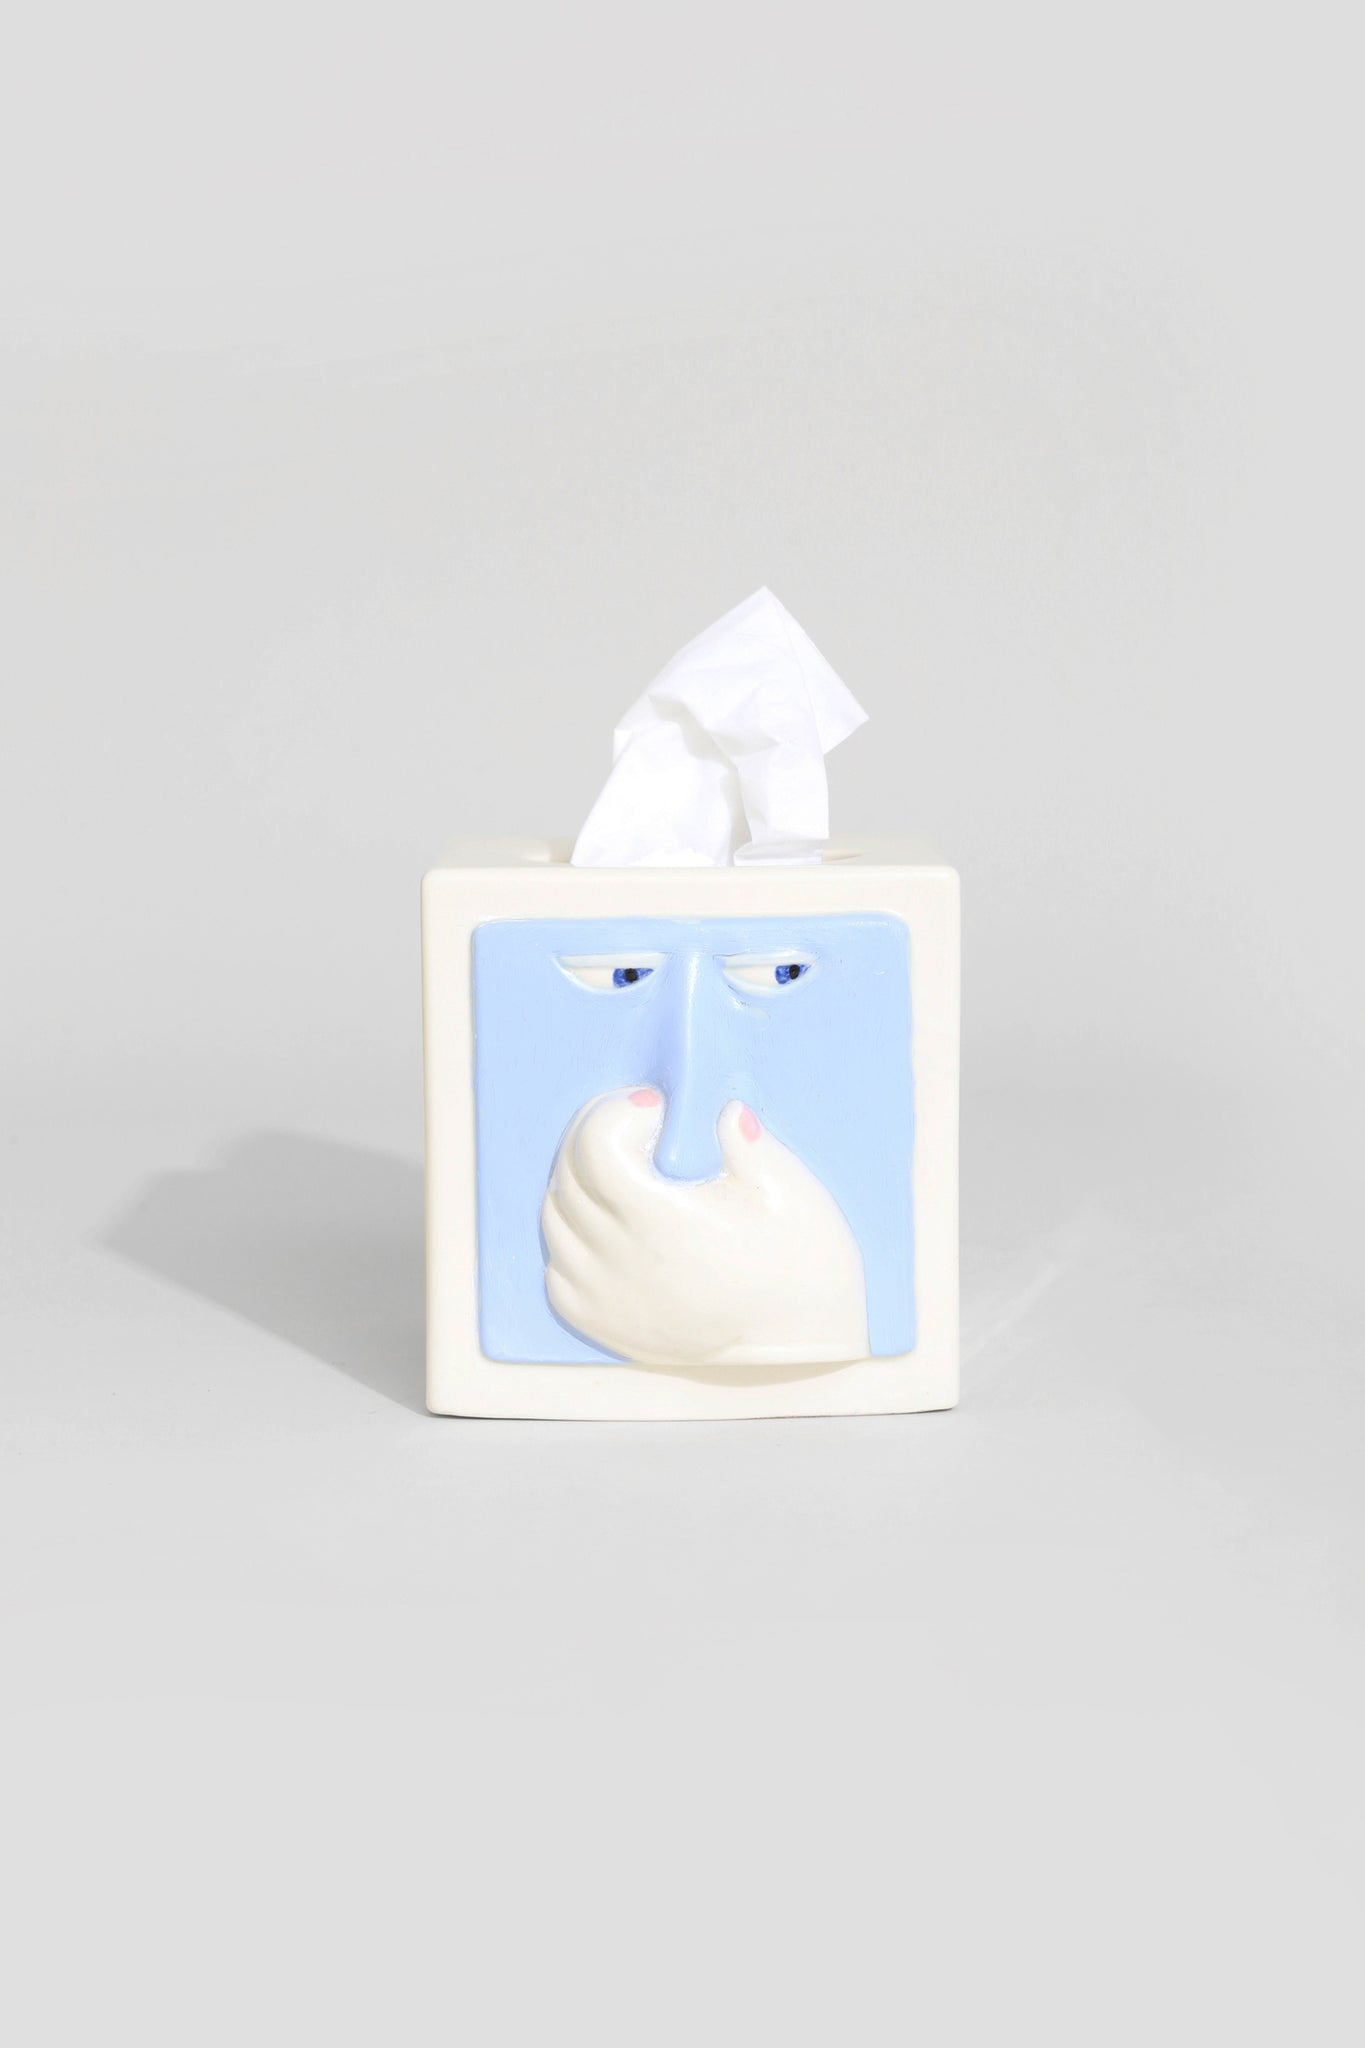 Sneezing Tissue Box